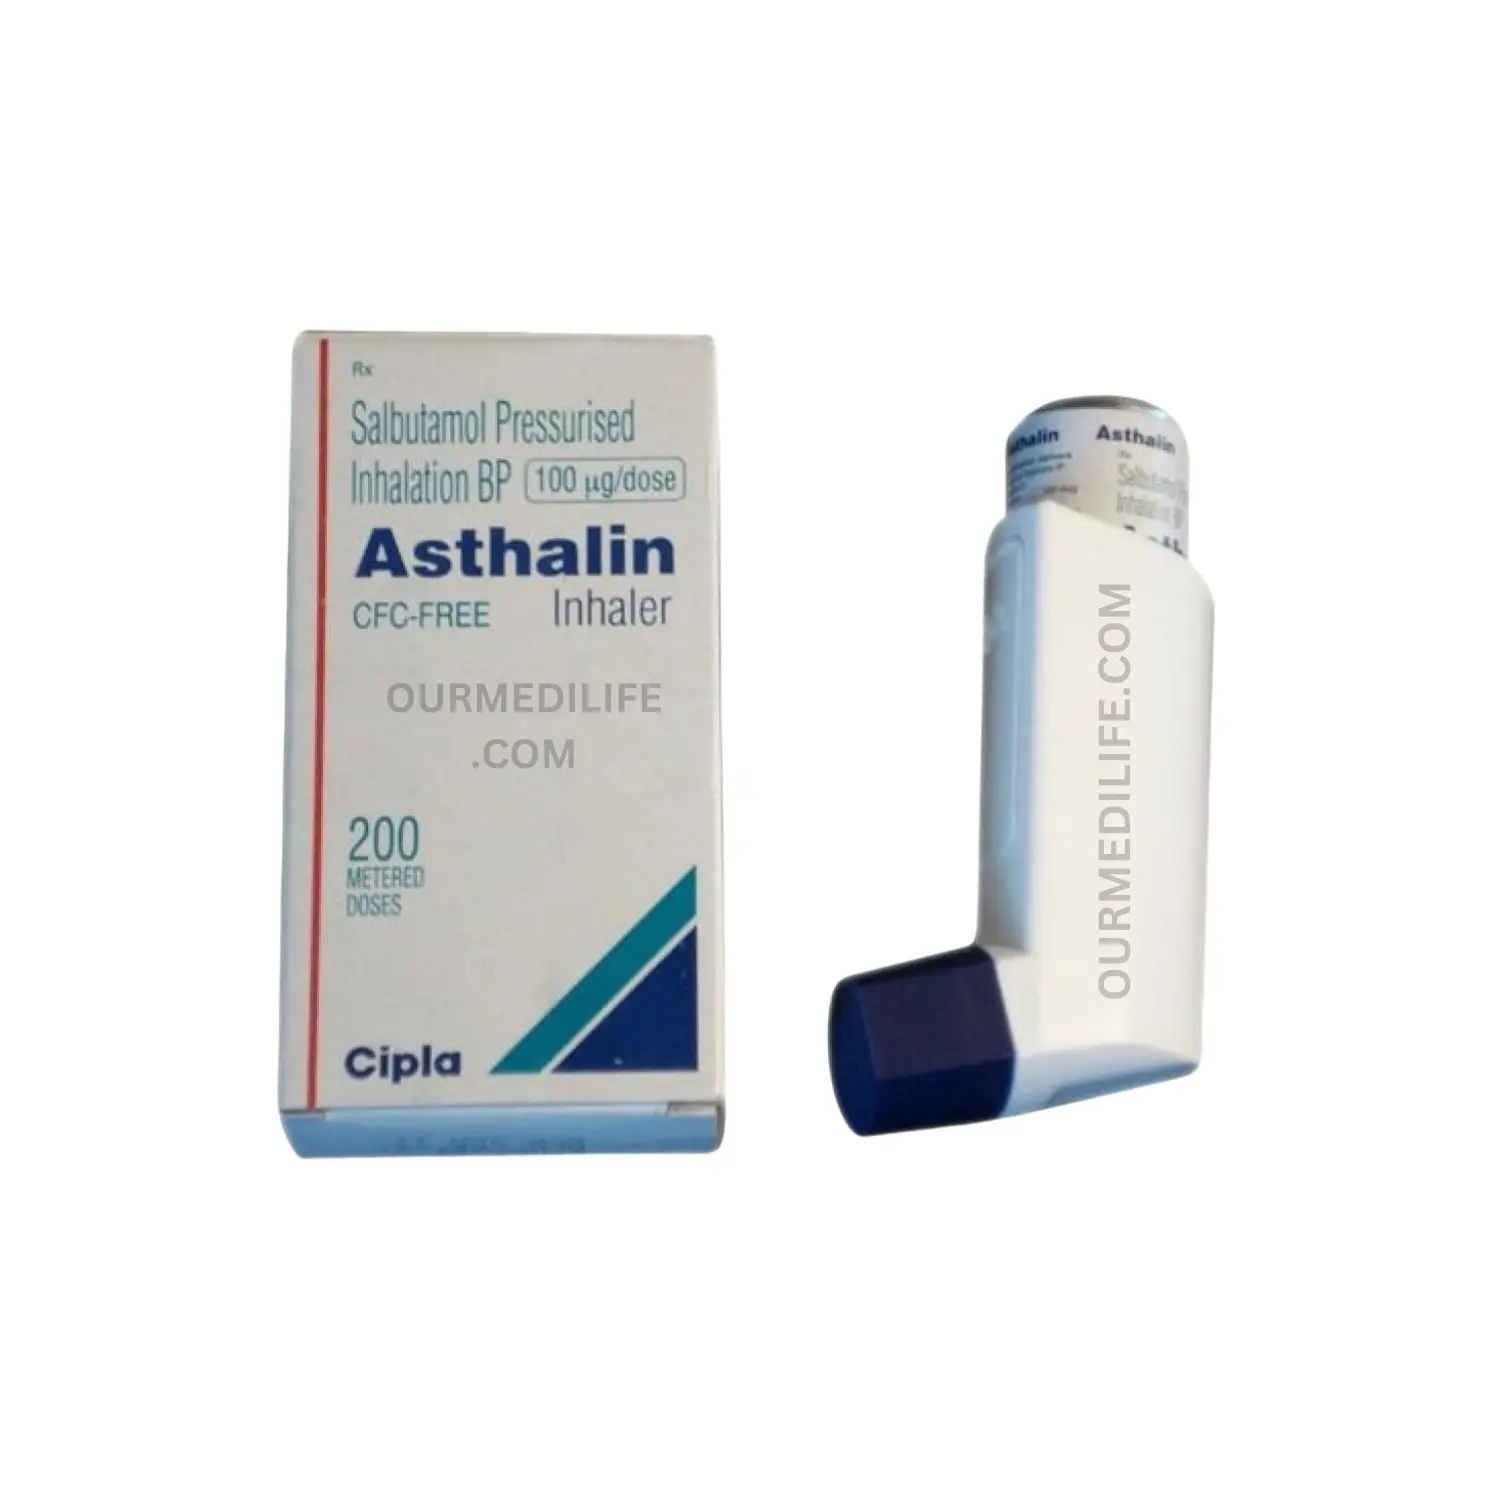 asthalin inhaler images